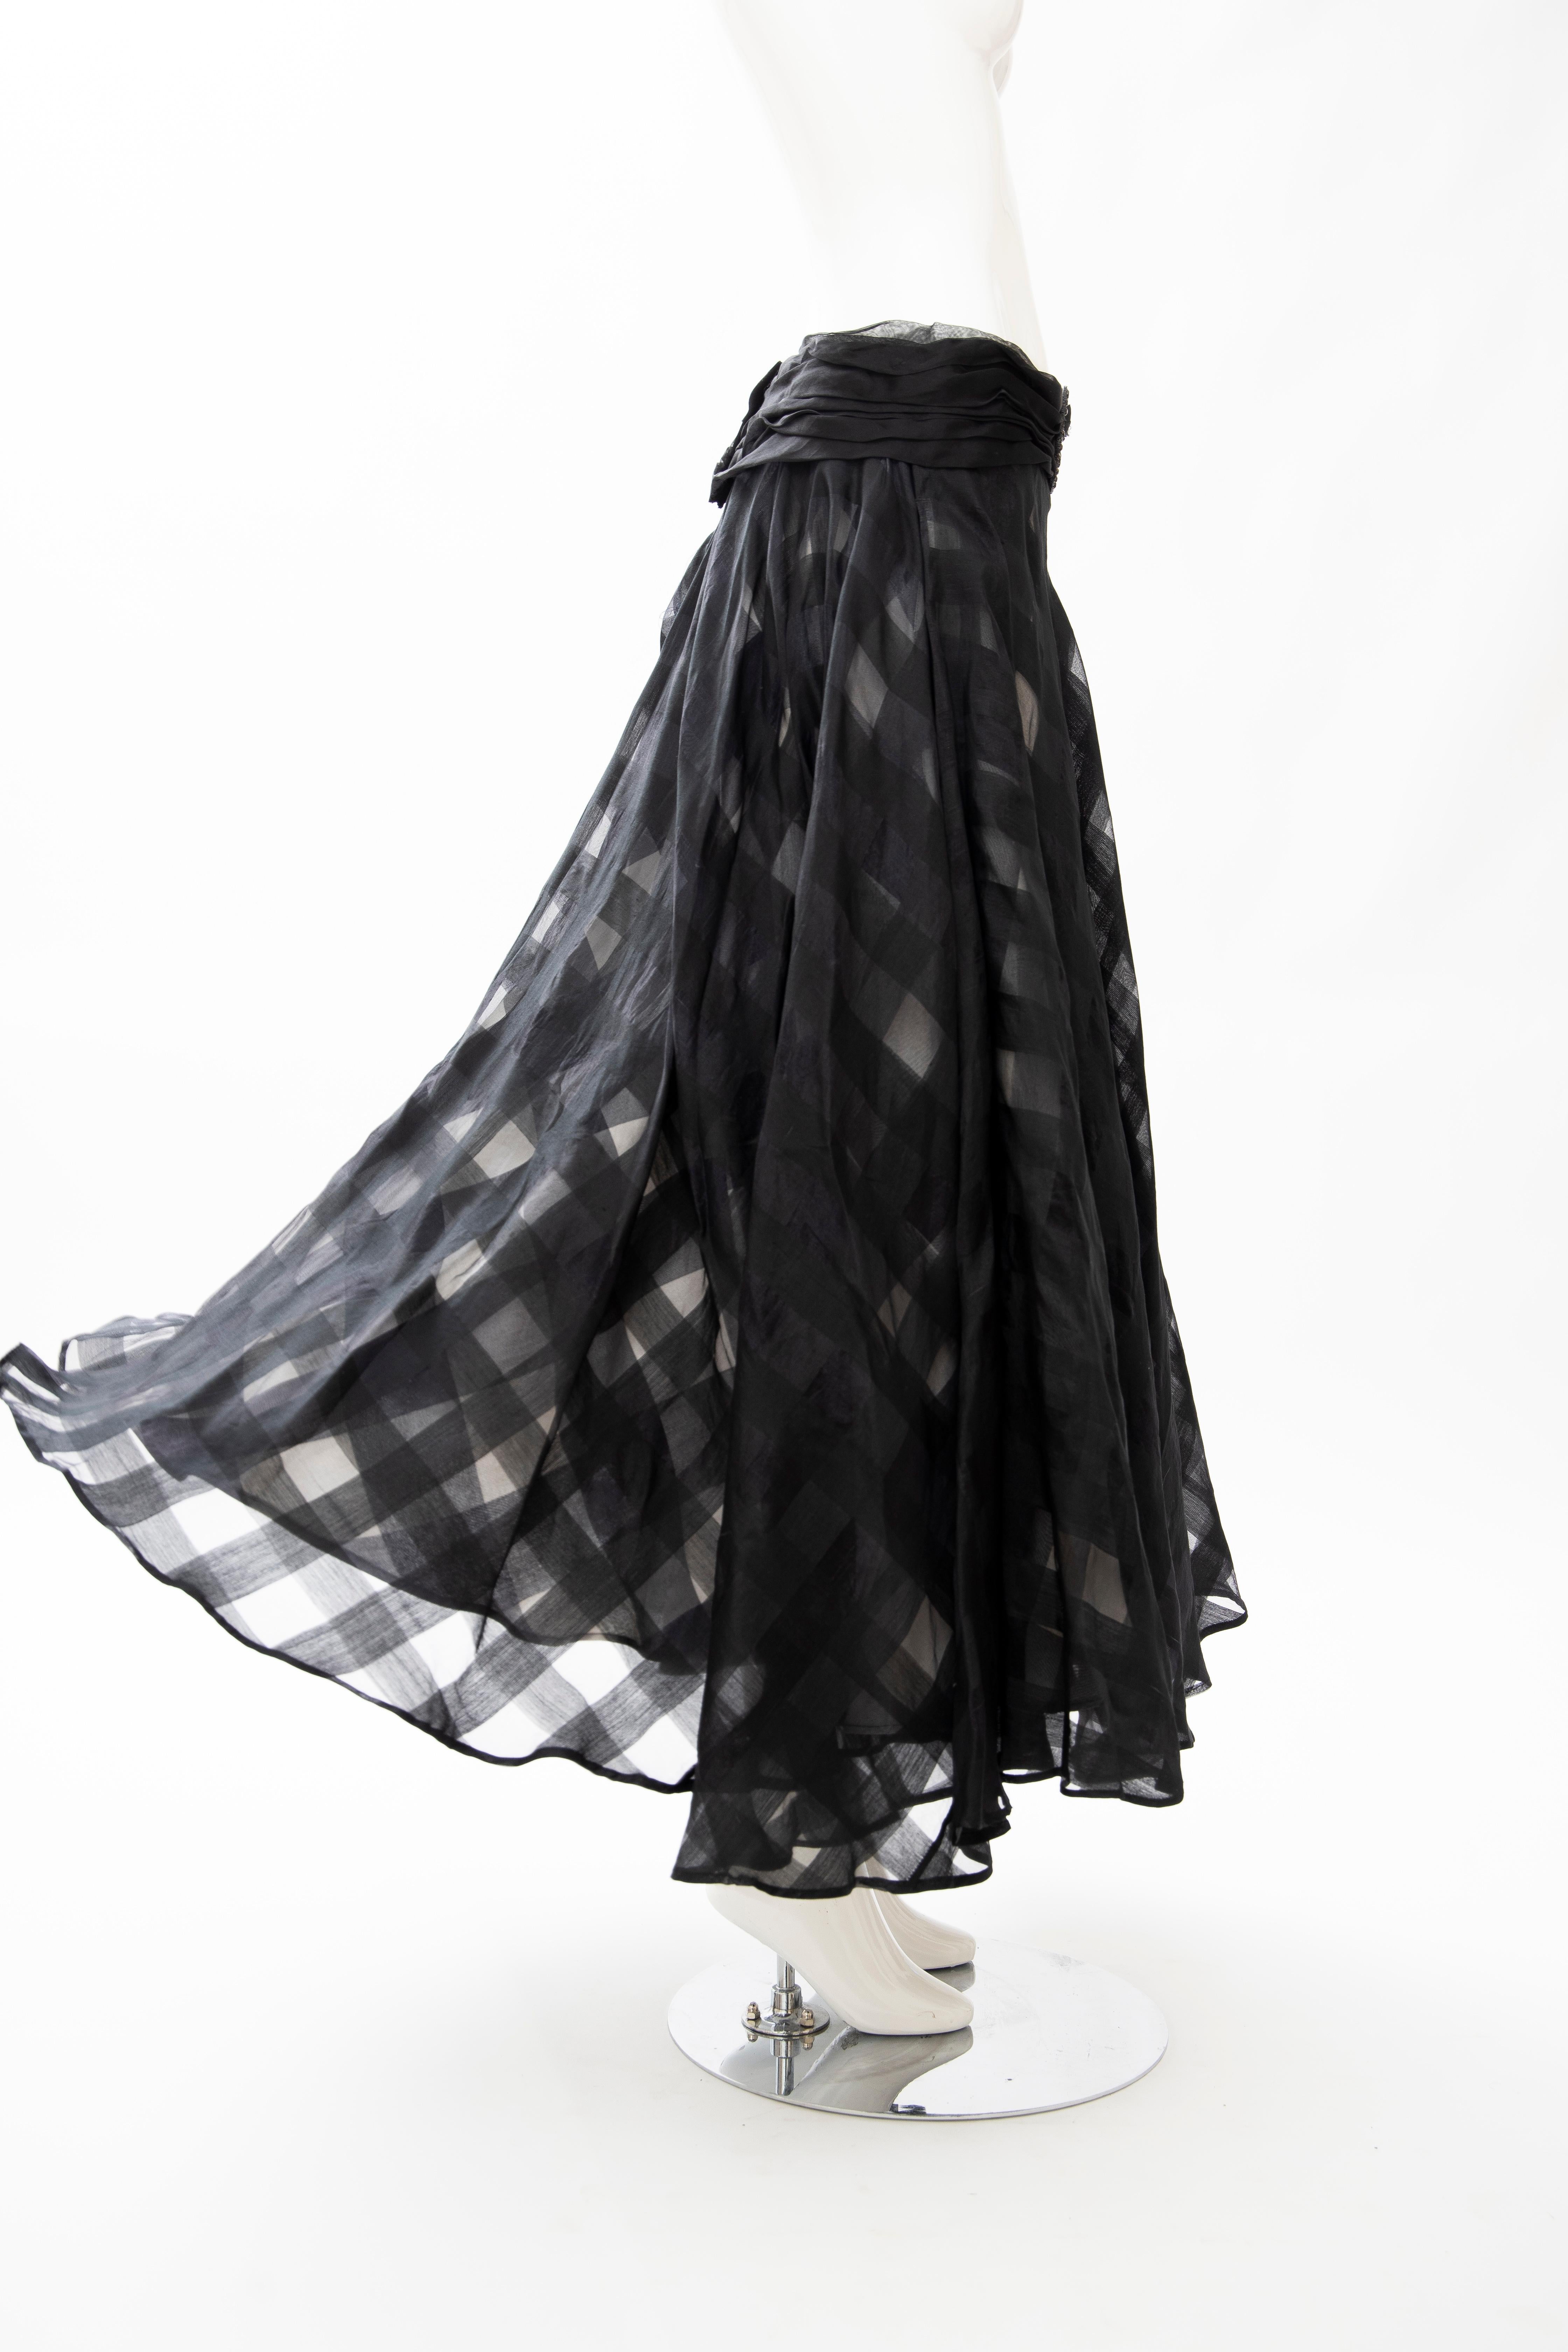 Olivier Theyskens Runway Black Silk Checkerboard Pattern Skirt, Spring 2000 For Sale 4